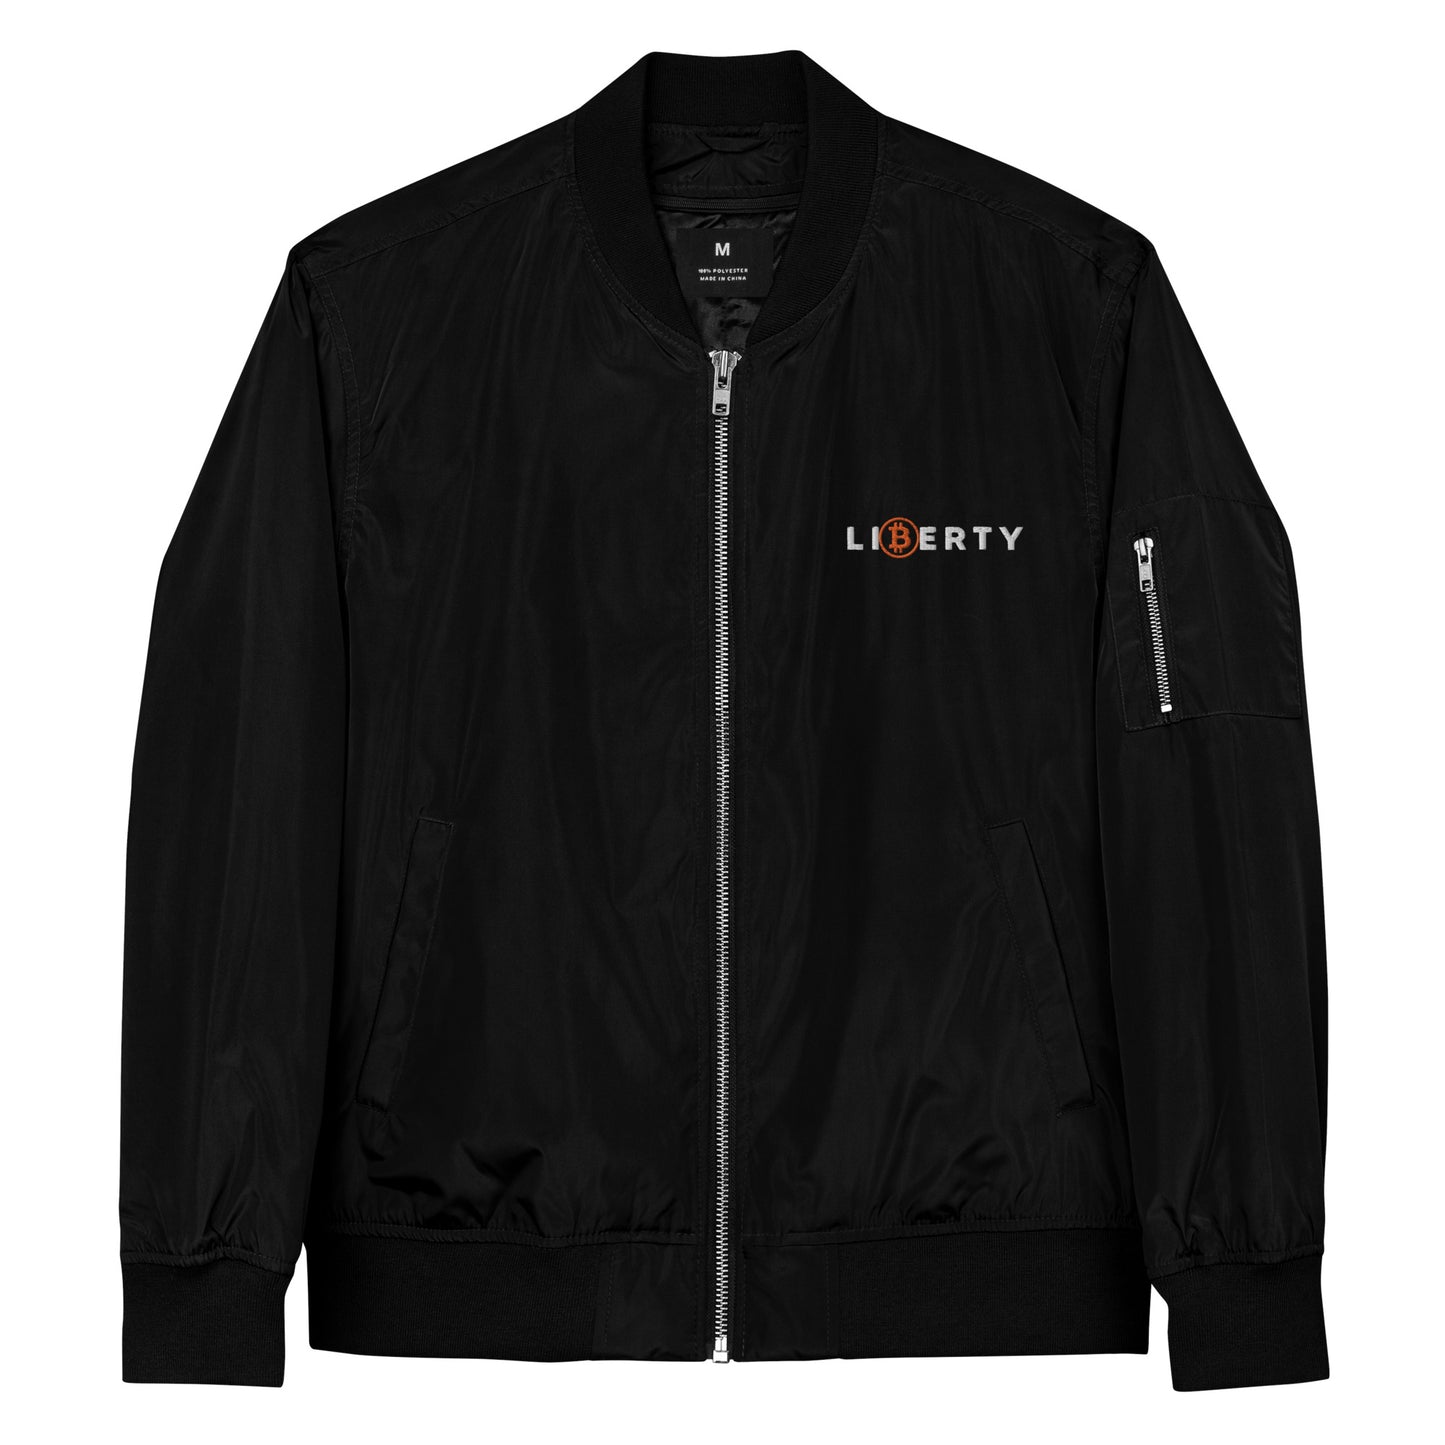 Liberty Premium recycled bomber jacket